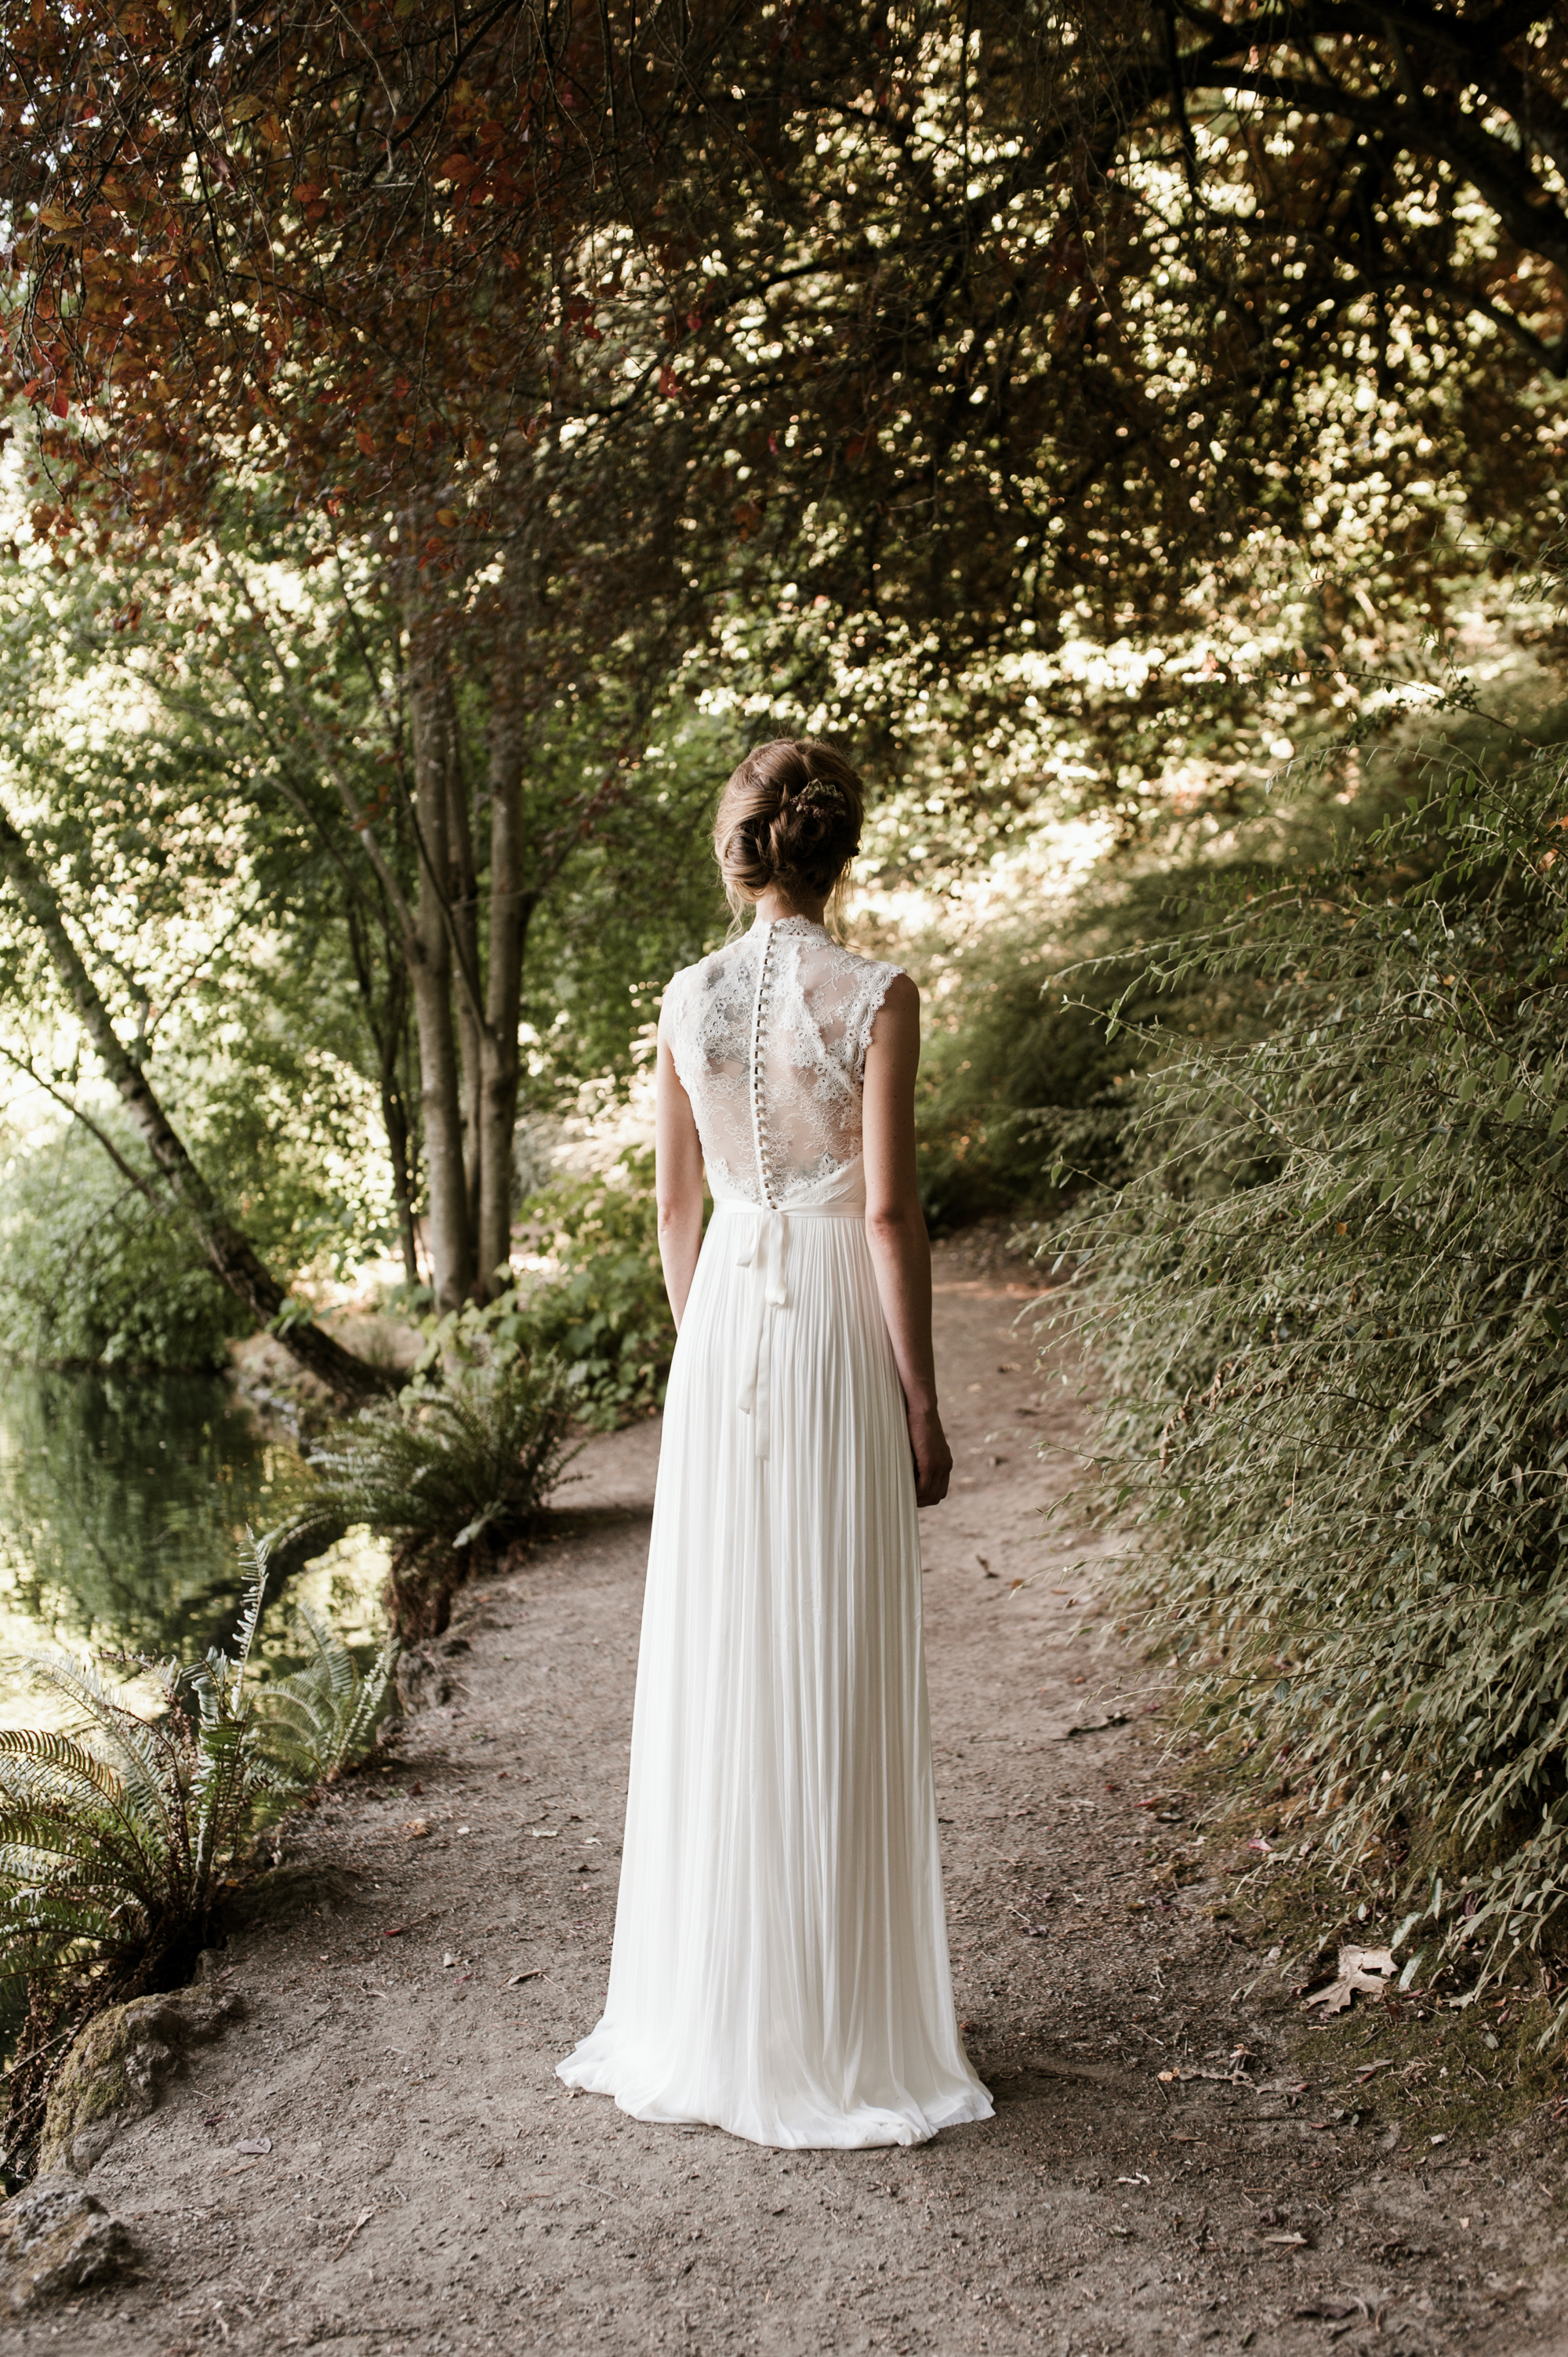 Detail of the bride's beautiful wedding gown. By Laurelhurst Park wedding photographer Briana Morrison